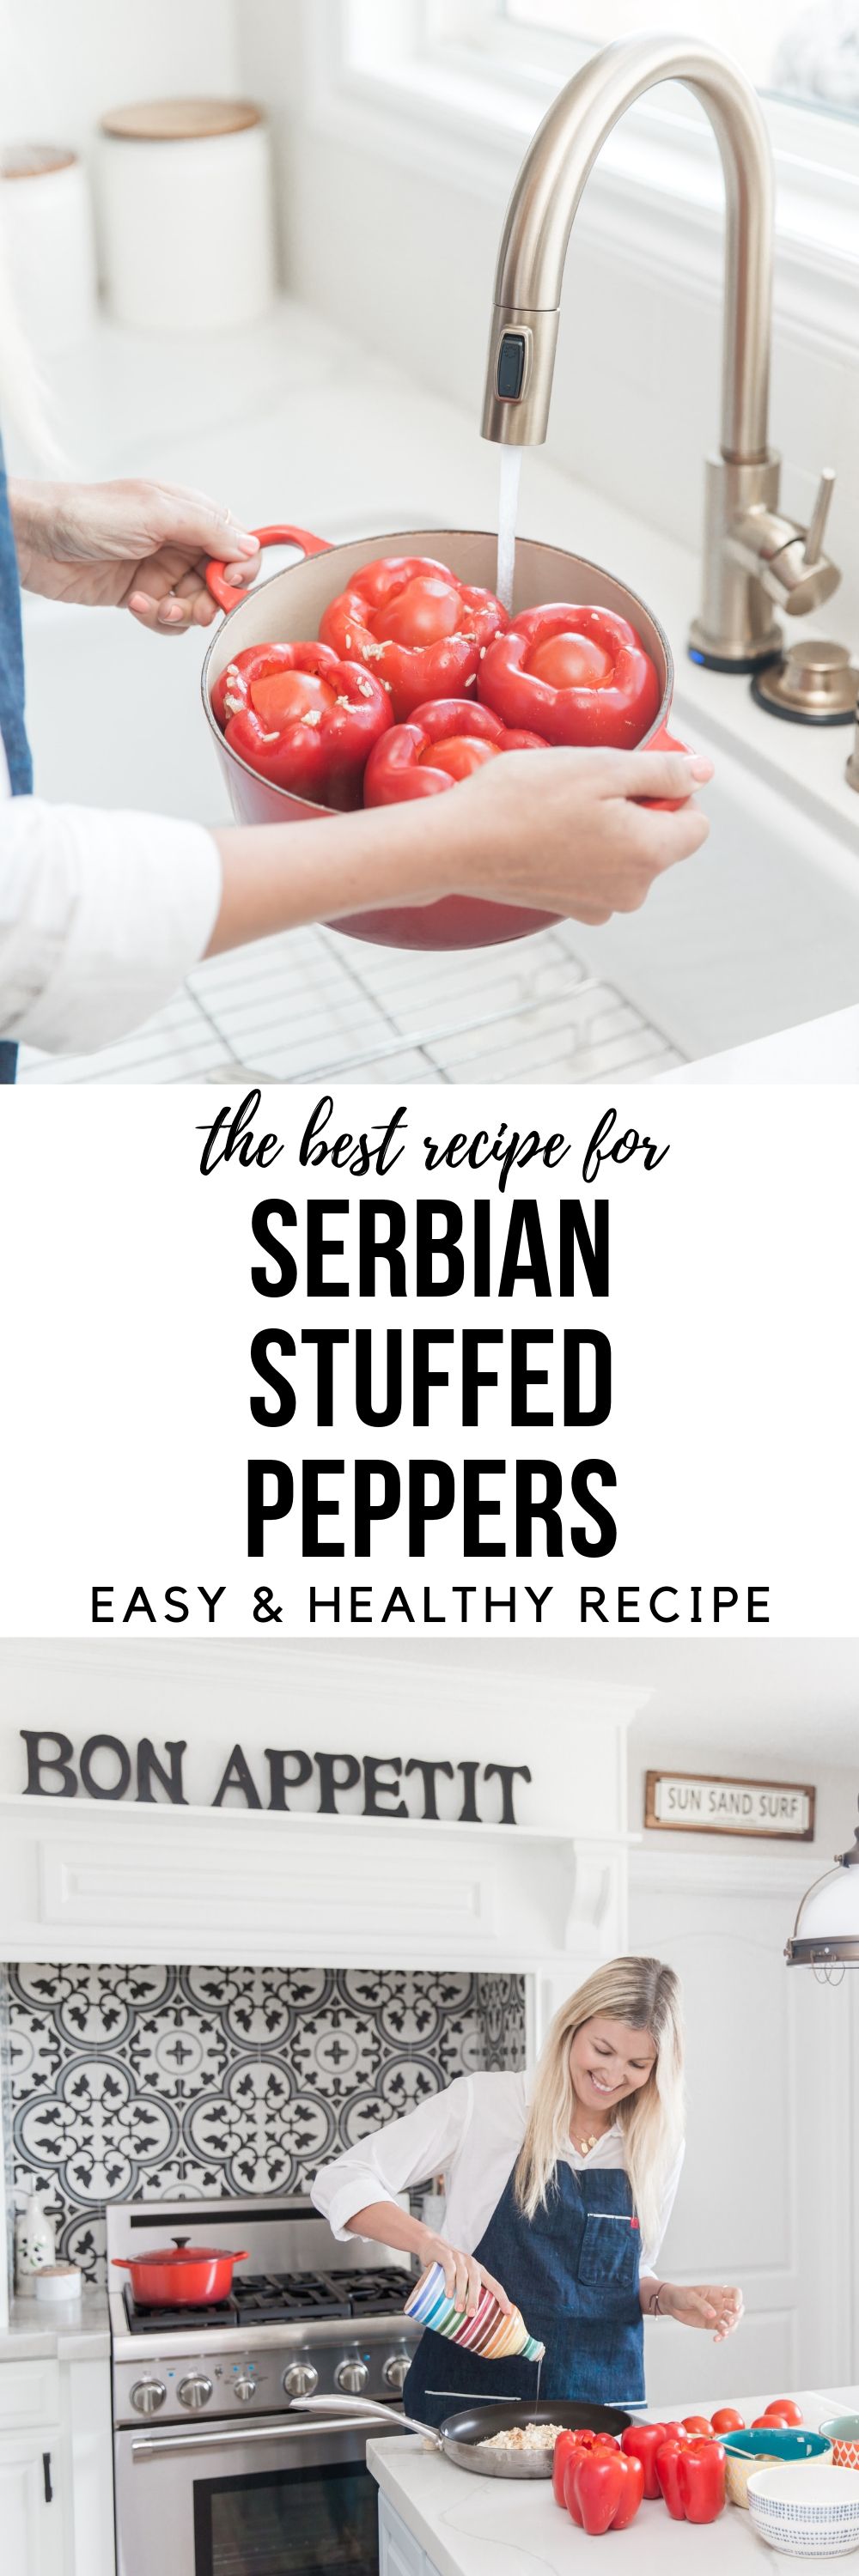 HEALTHY SERBIAN STUFFED PEPPERS RECIPE